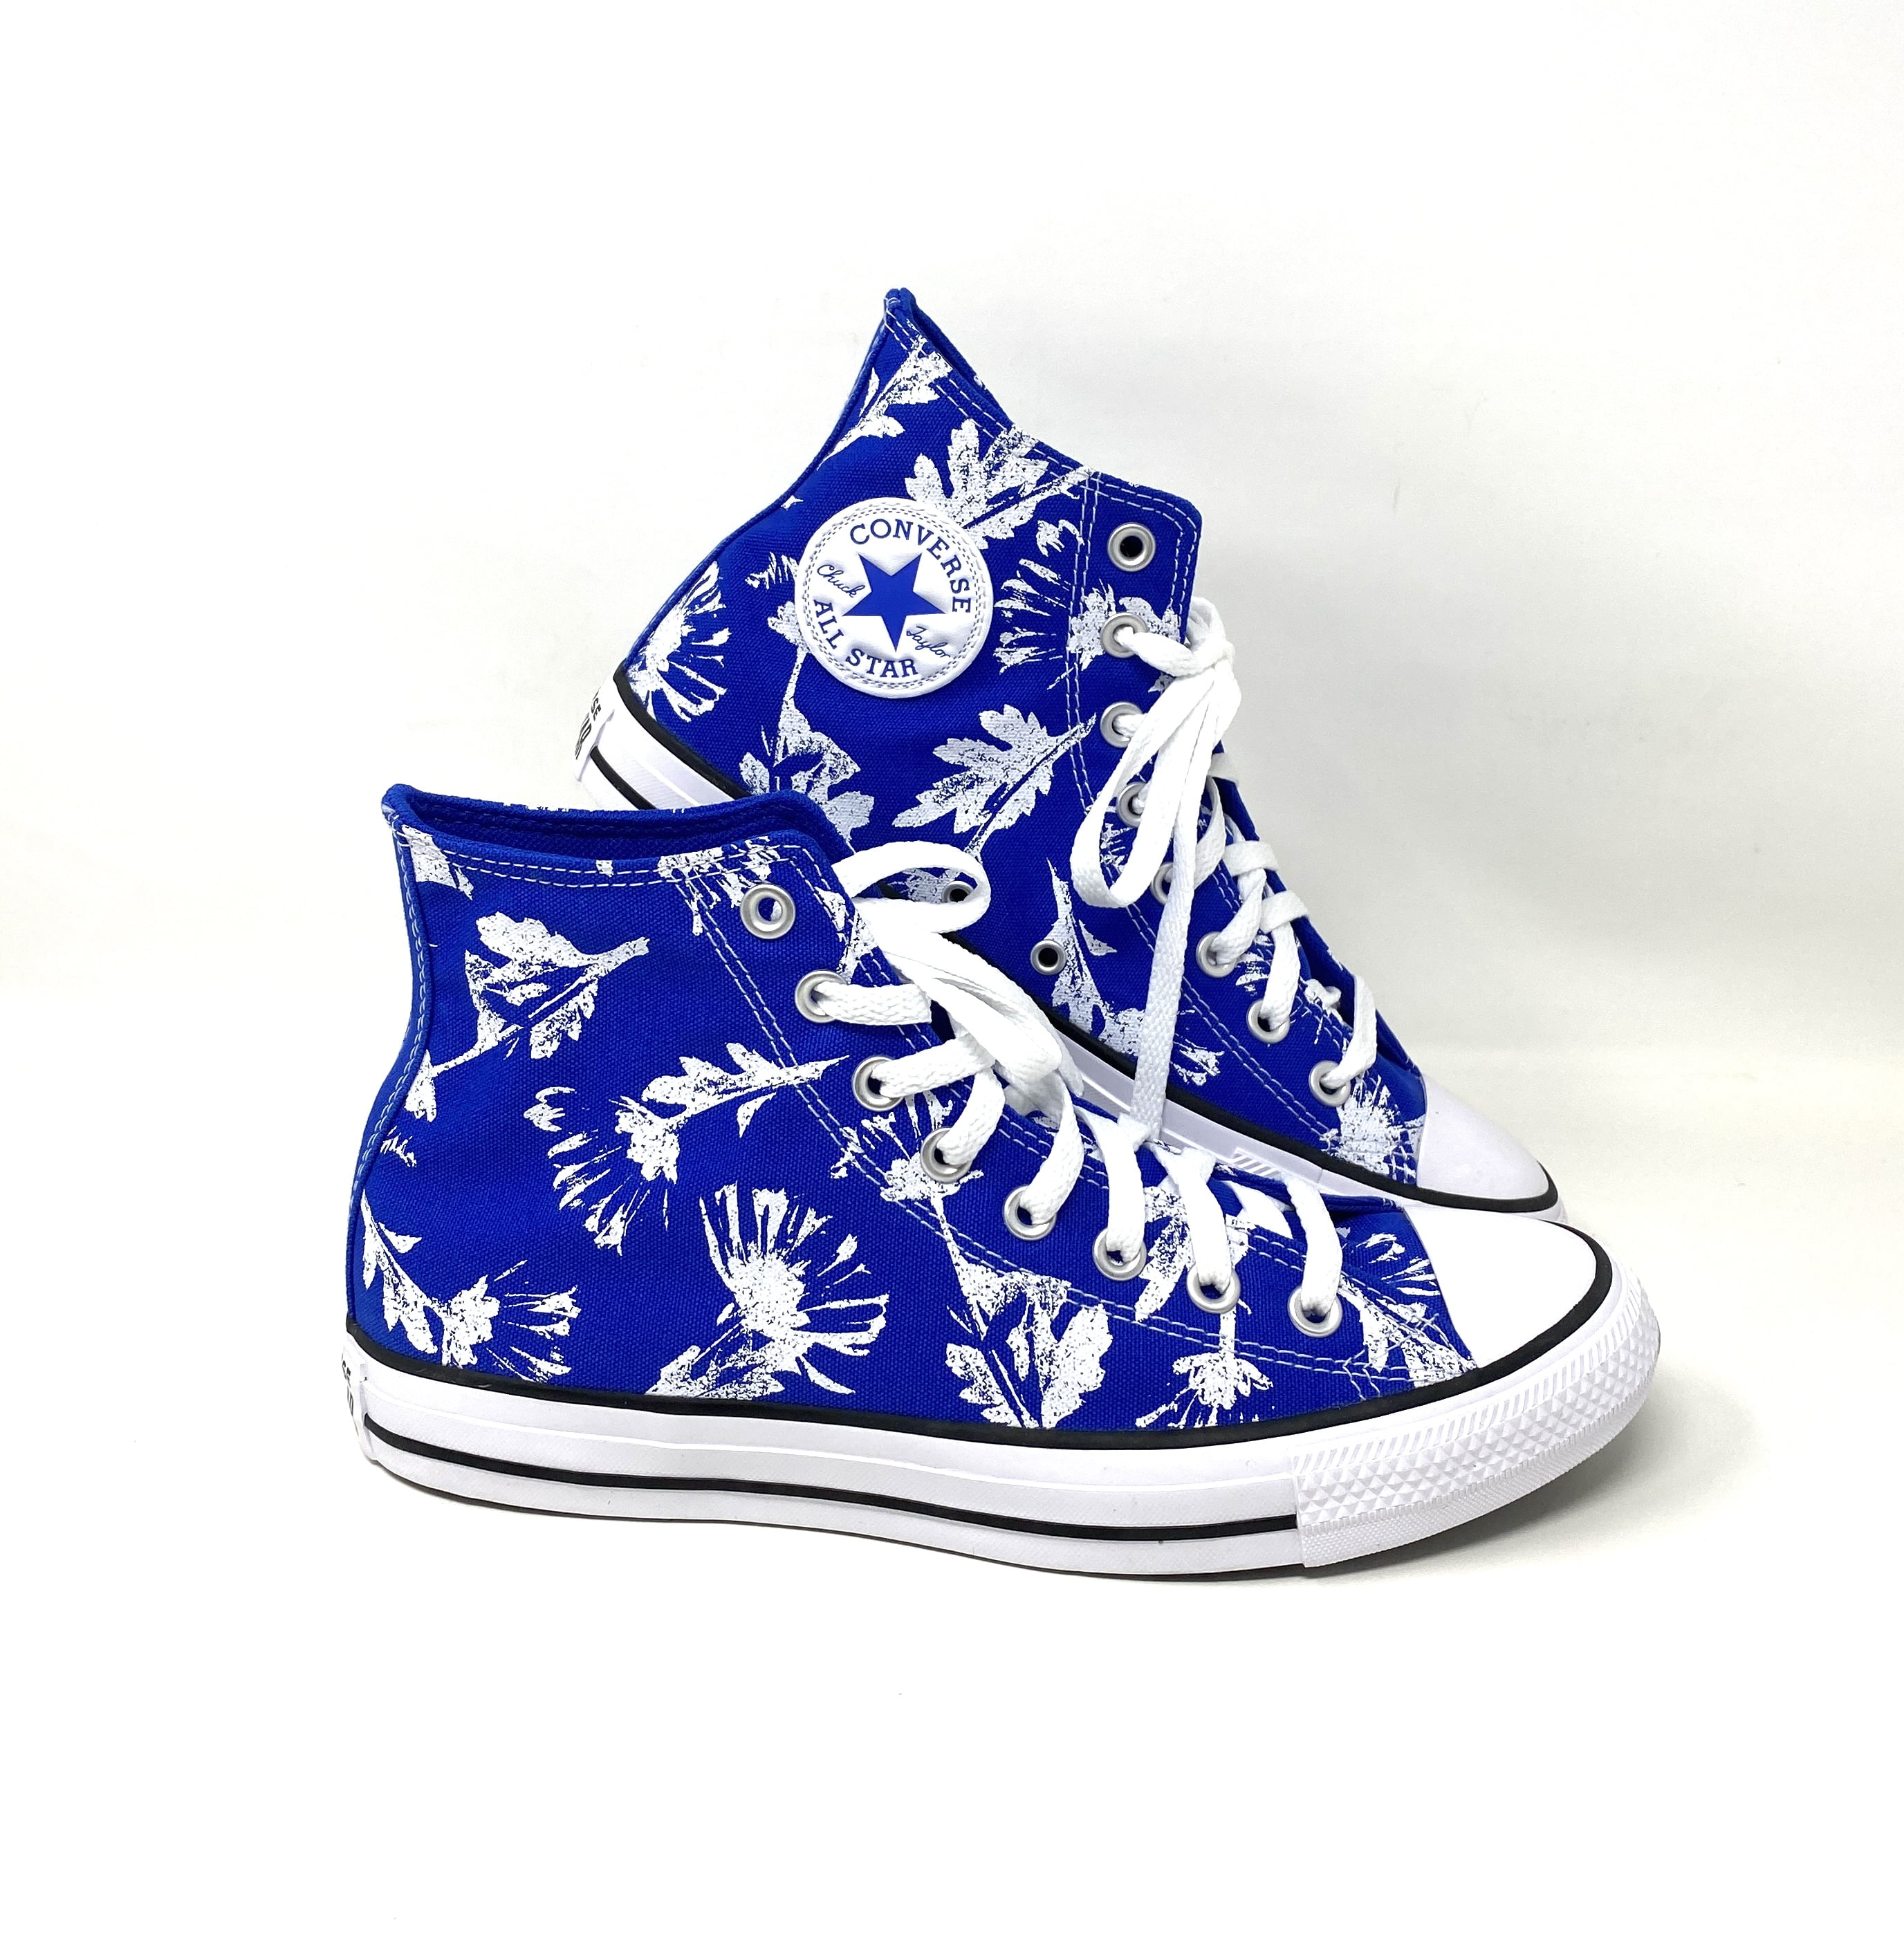 Converse CTAS HI GAME ROYAL Blue White Canvas Sneakers Women's 571389F -  